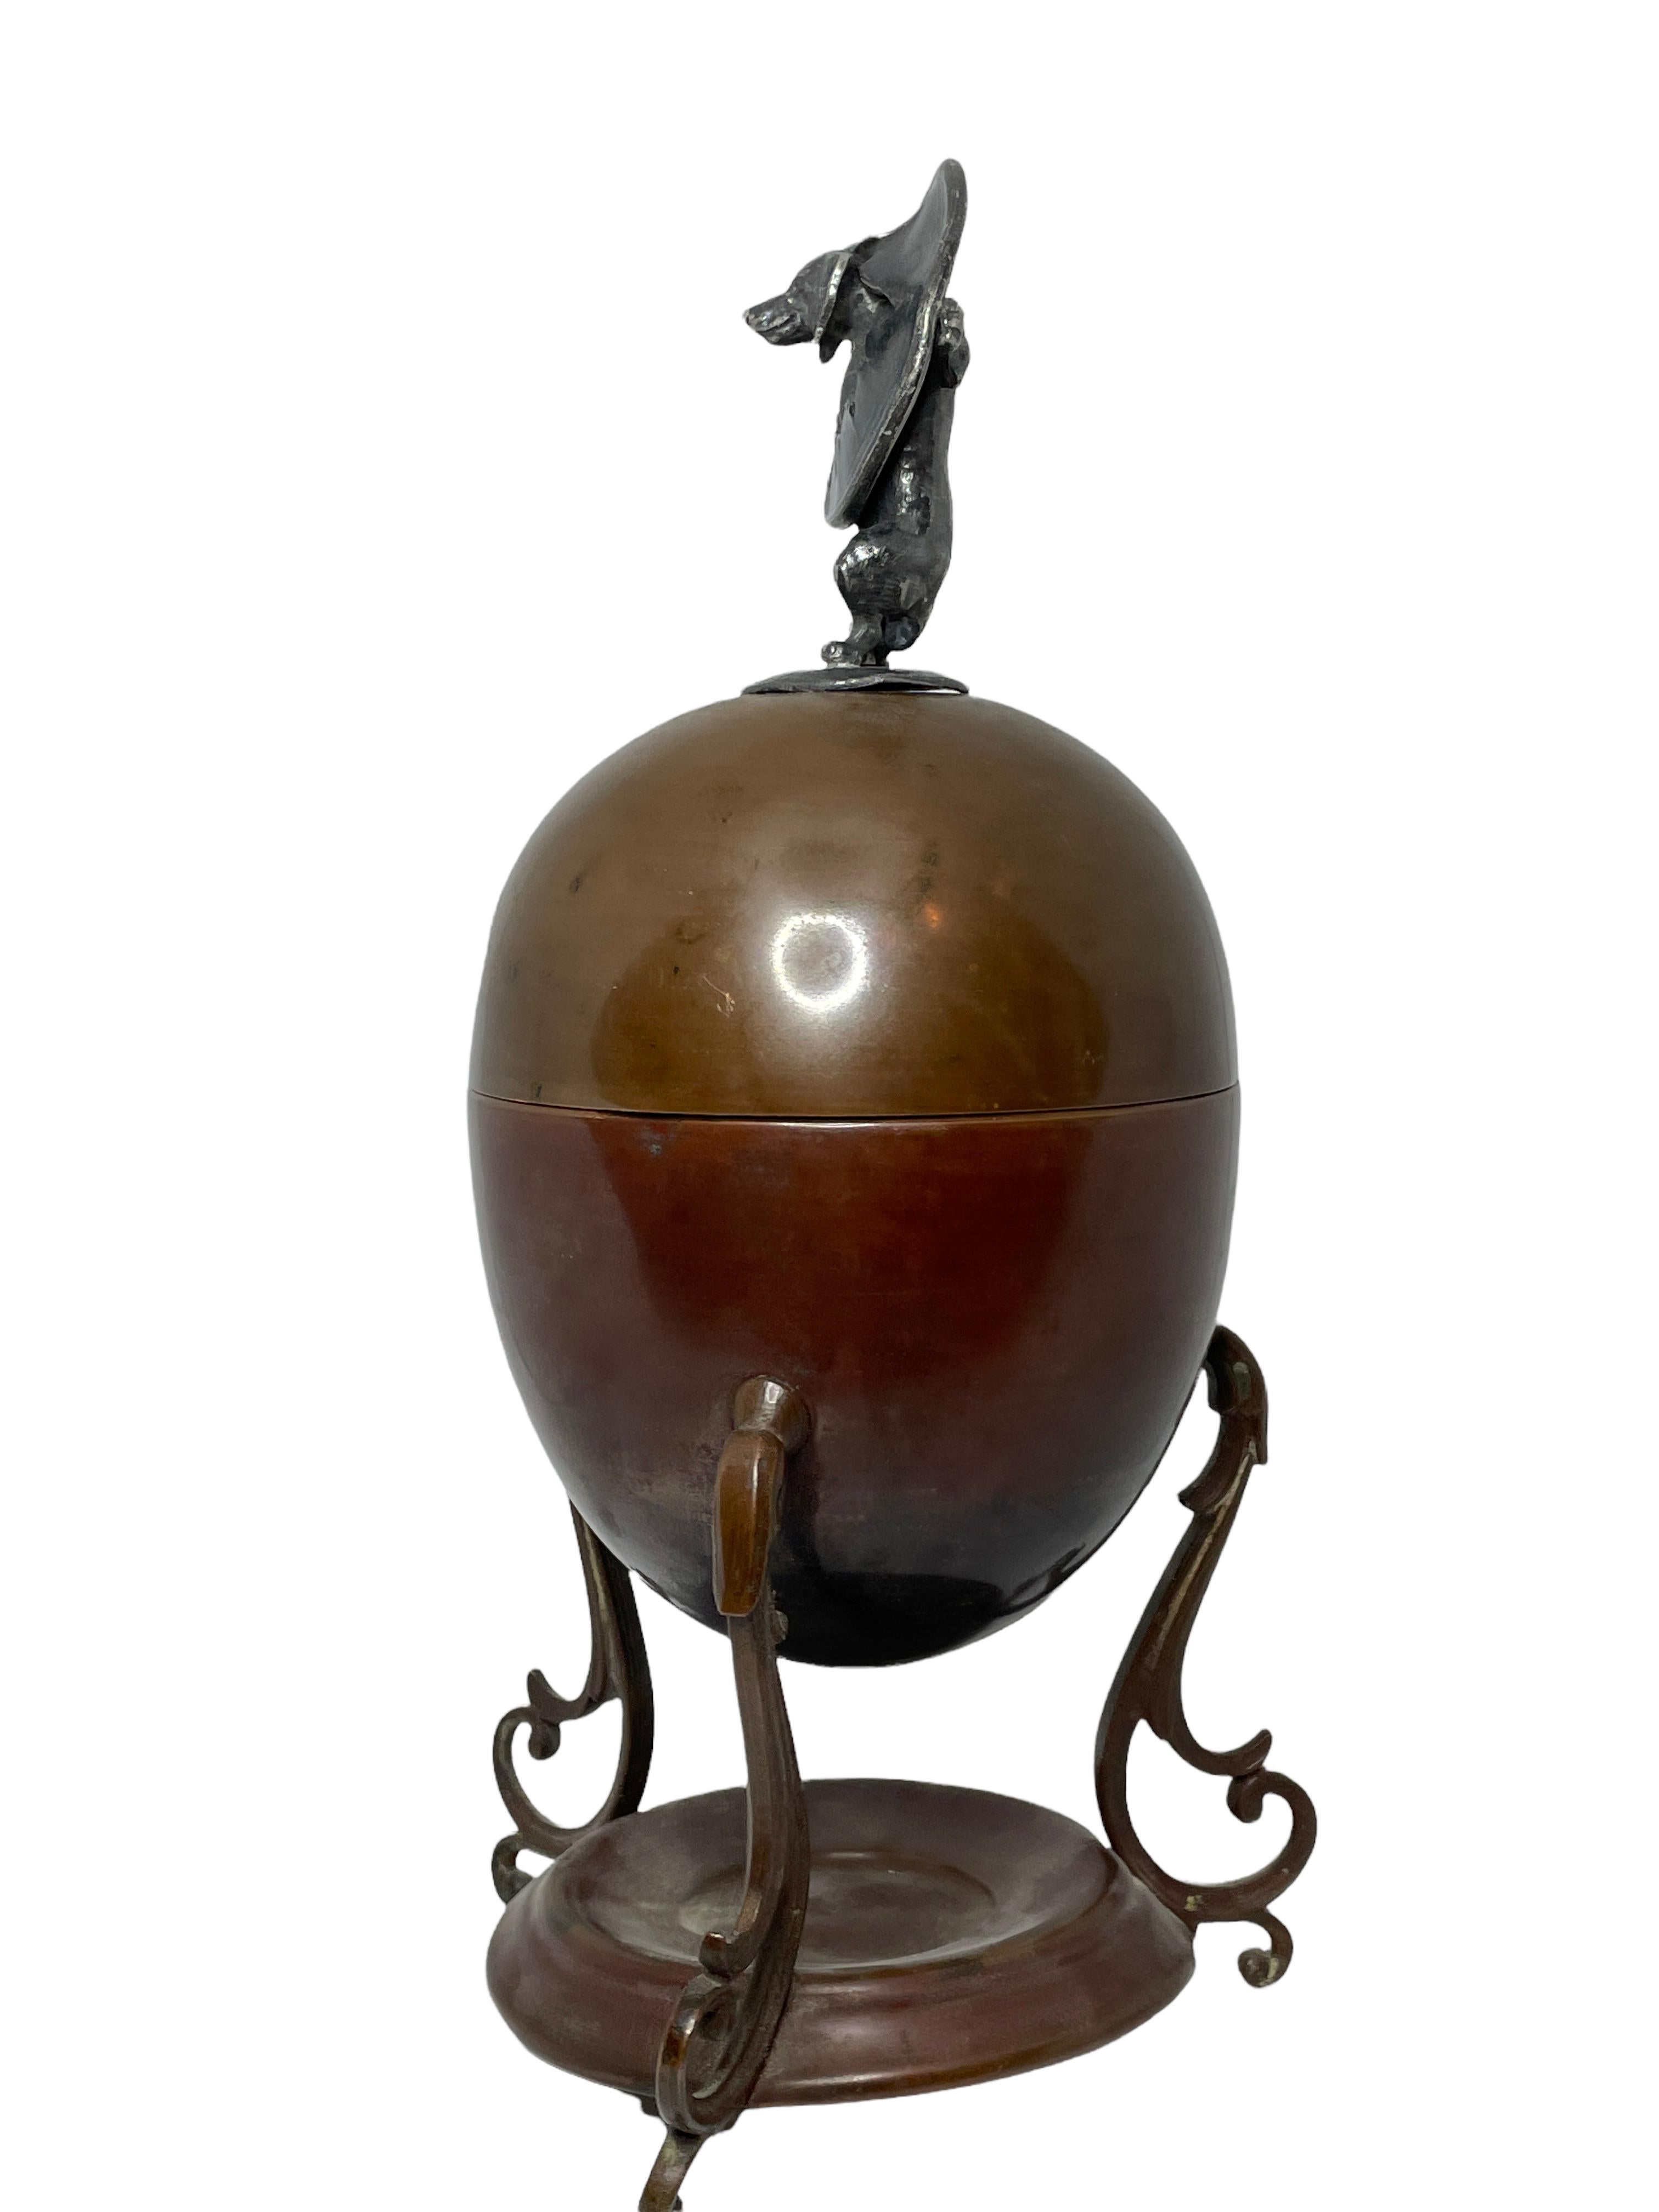 Art Nouveau Antique 19th c Copper Egg Coddler Egg boiler with Dog Figure, German